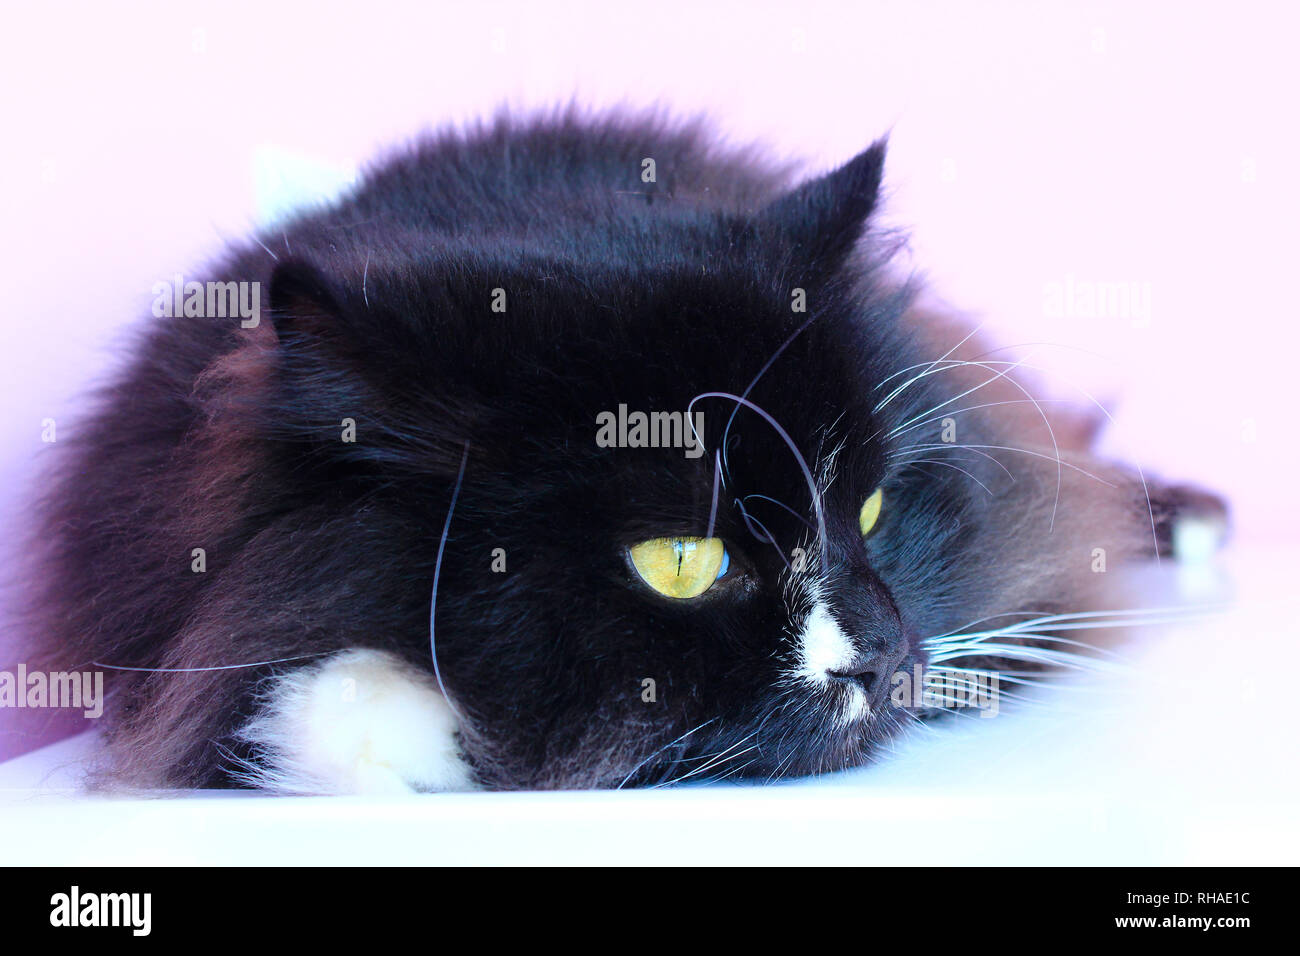 Muzzle of cat. Close-up. Muzzle of black cat. Lazy pet. Domestic animal Stock Photo